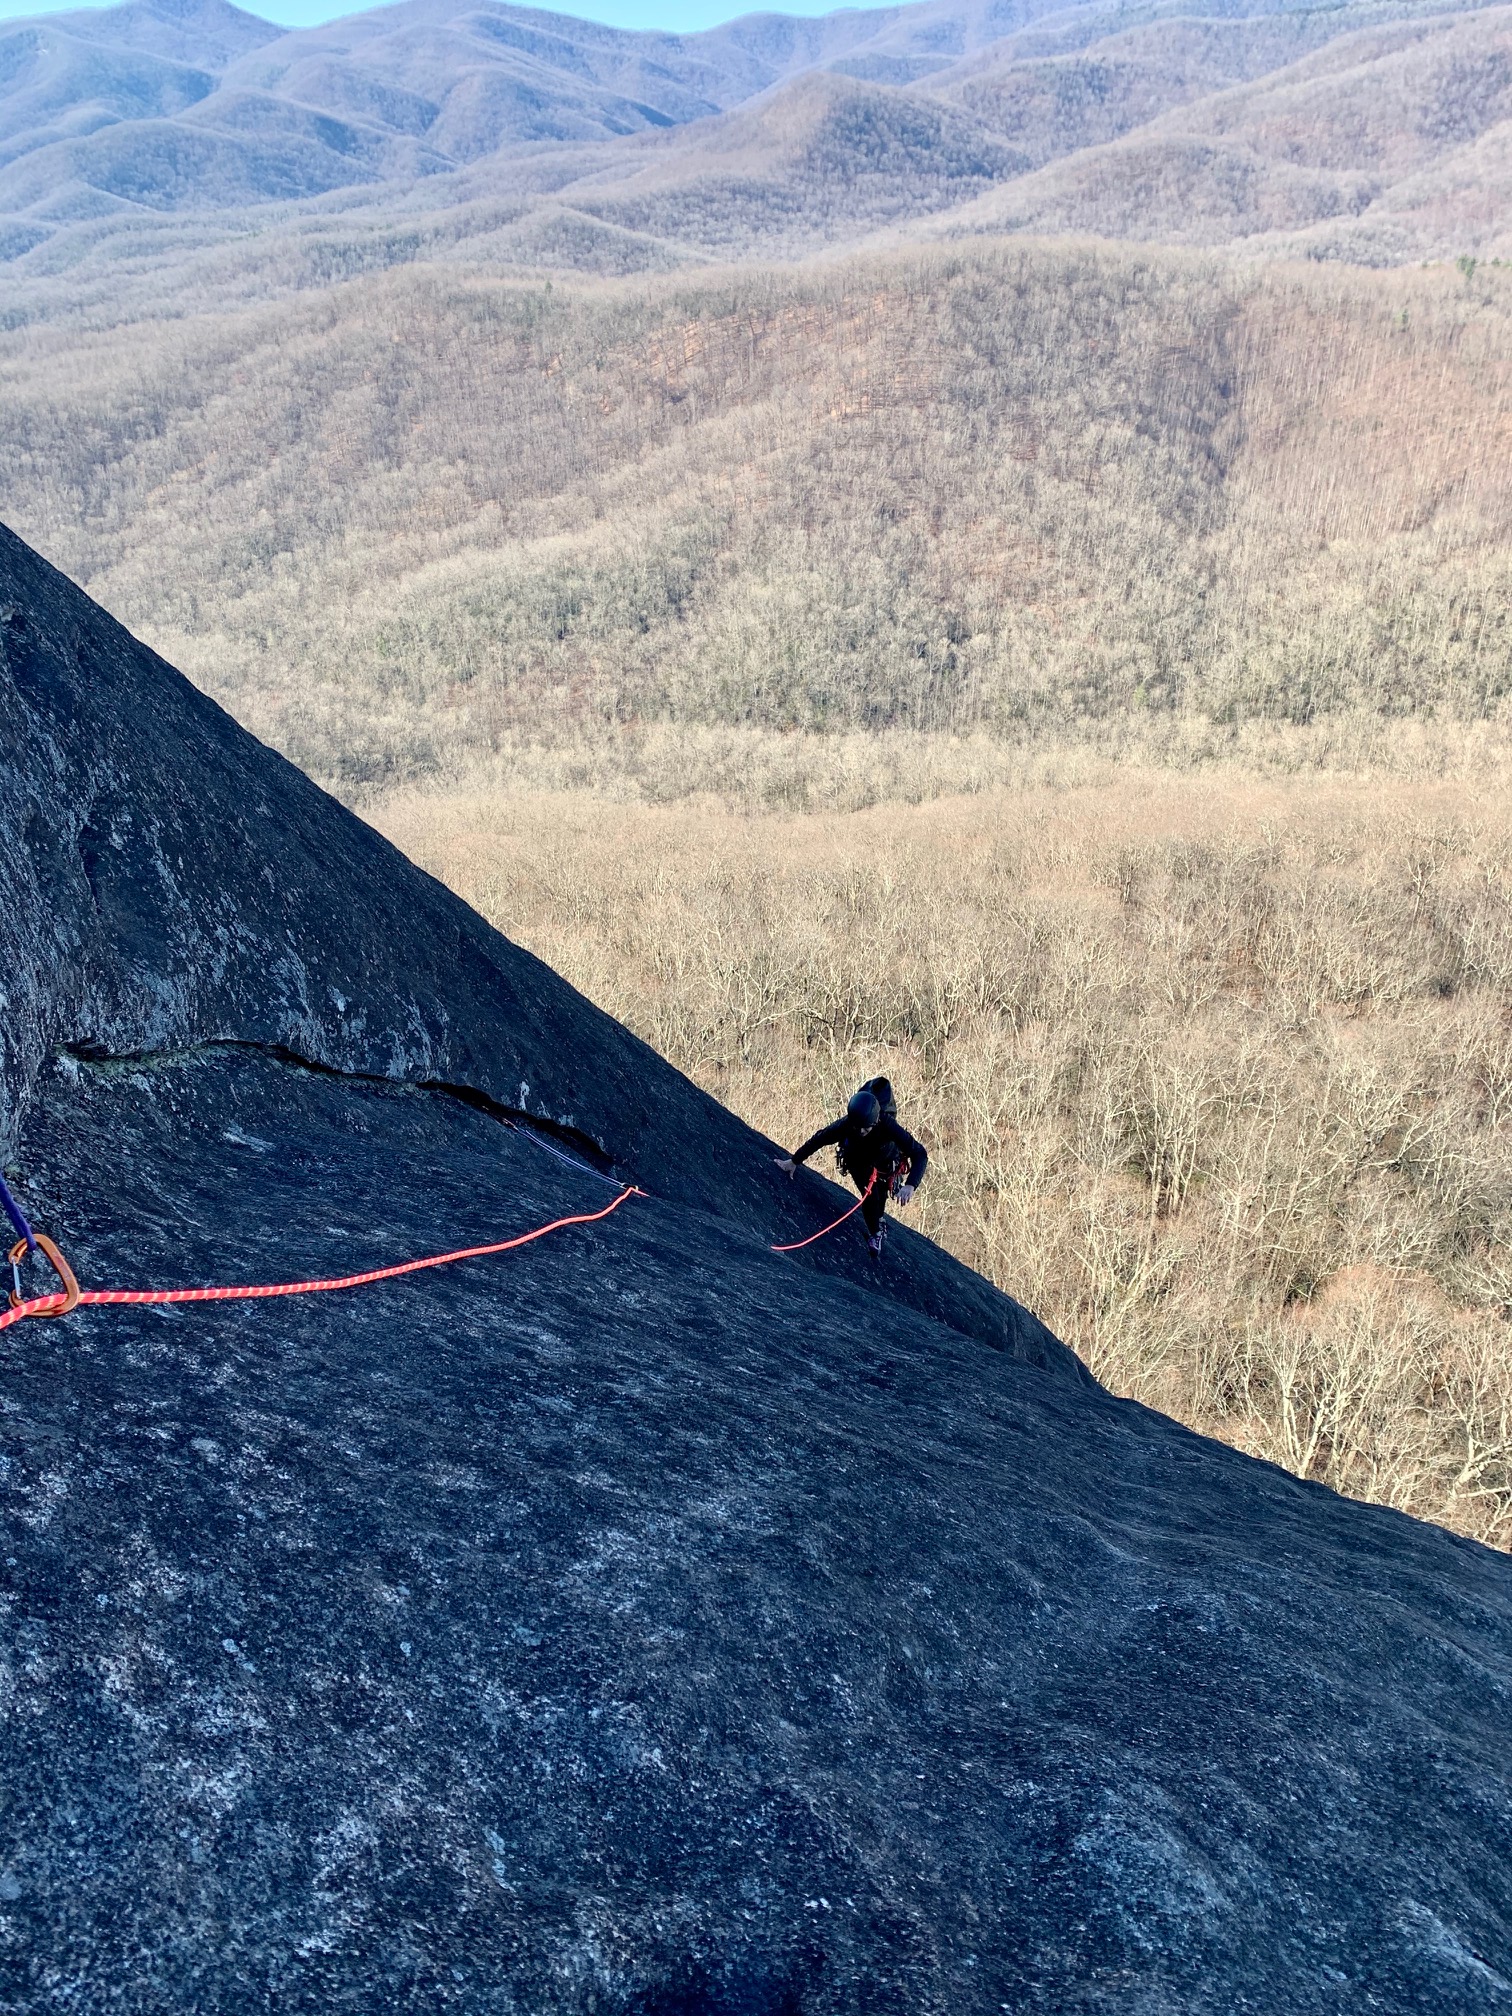 Rock Climbing North Carolina